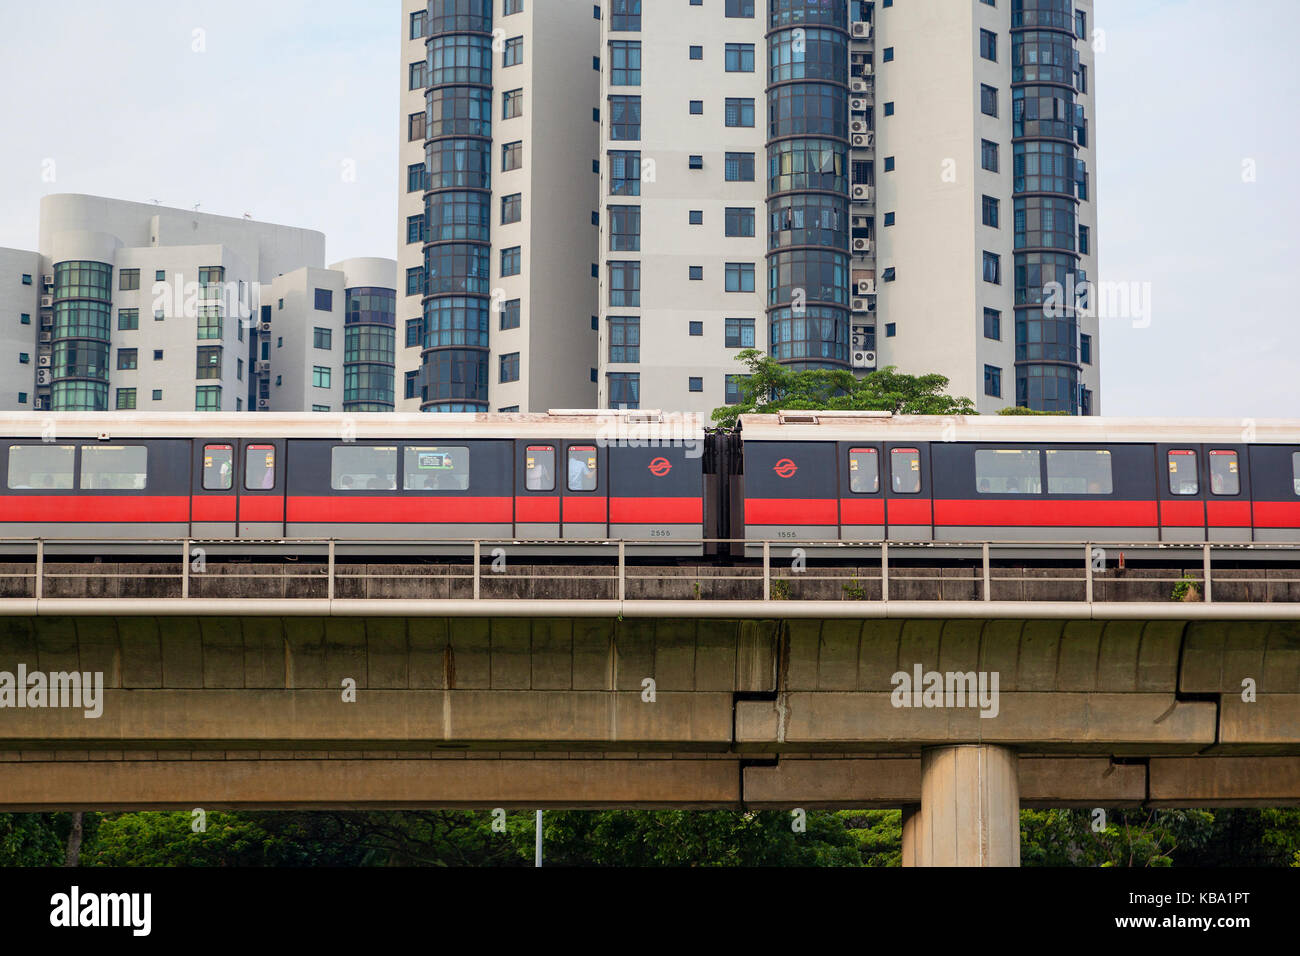 Singapur - Septiembre 11, 2017: Singapur smrt (Mass Rapid Transit) metro viaja sobre los rieles elevados, a través de un barrio de viviendas públicas el smrt. Foto de stock